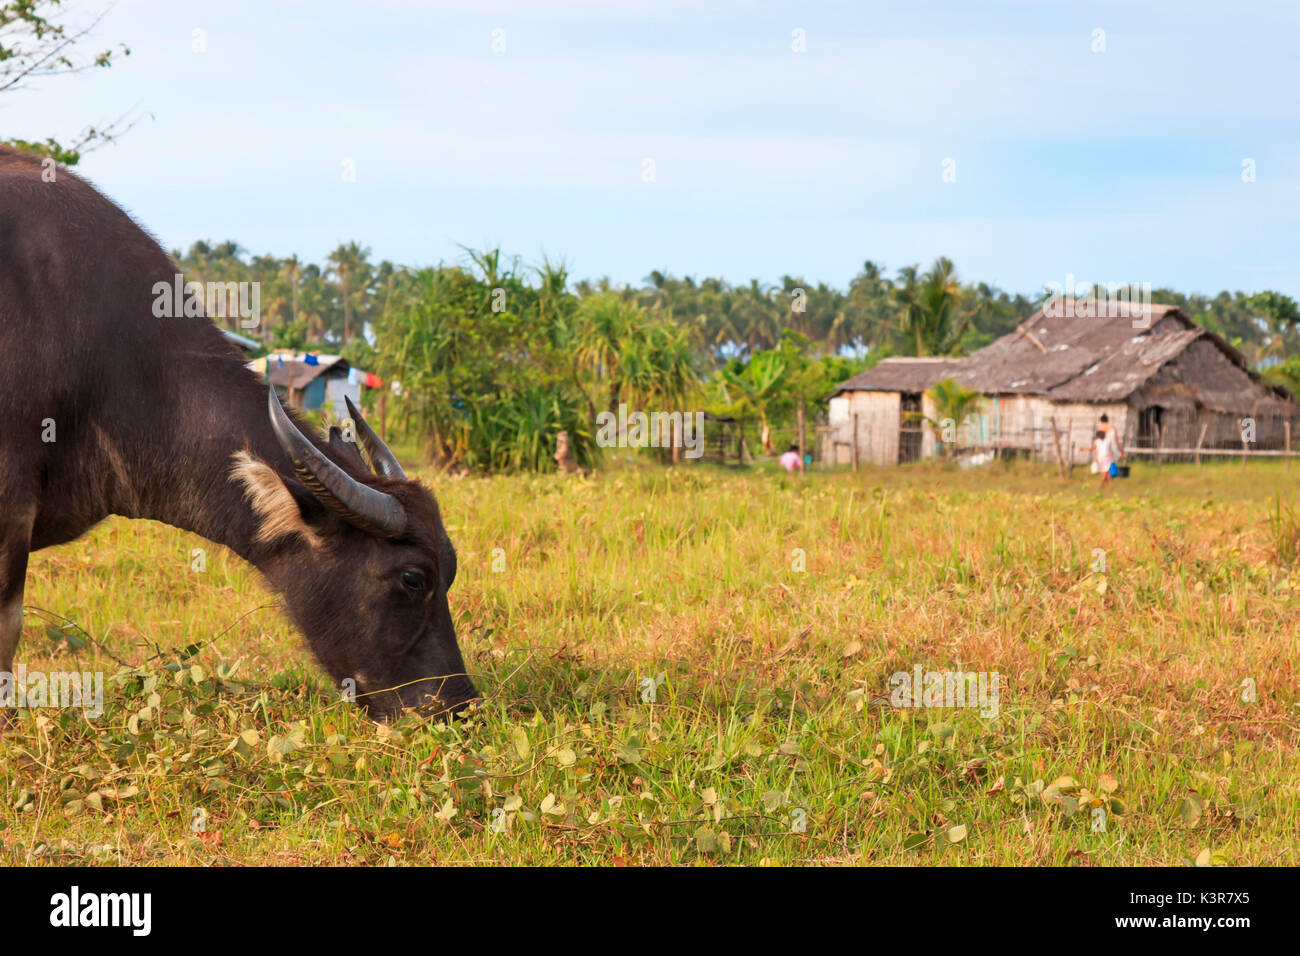 Rice field in Palawan, Philippines, with water buffalo (Carabao) Stock Photo